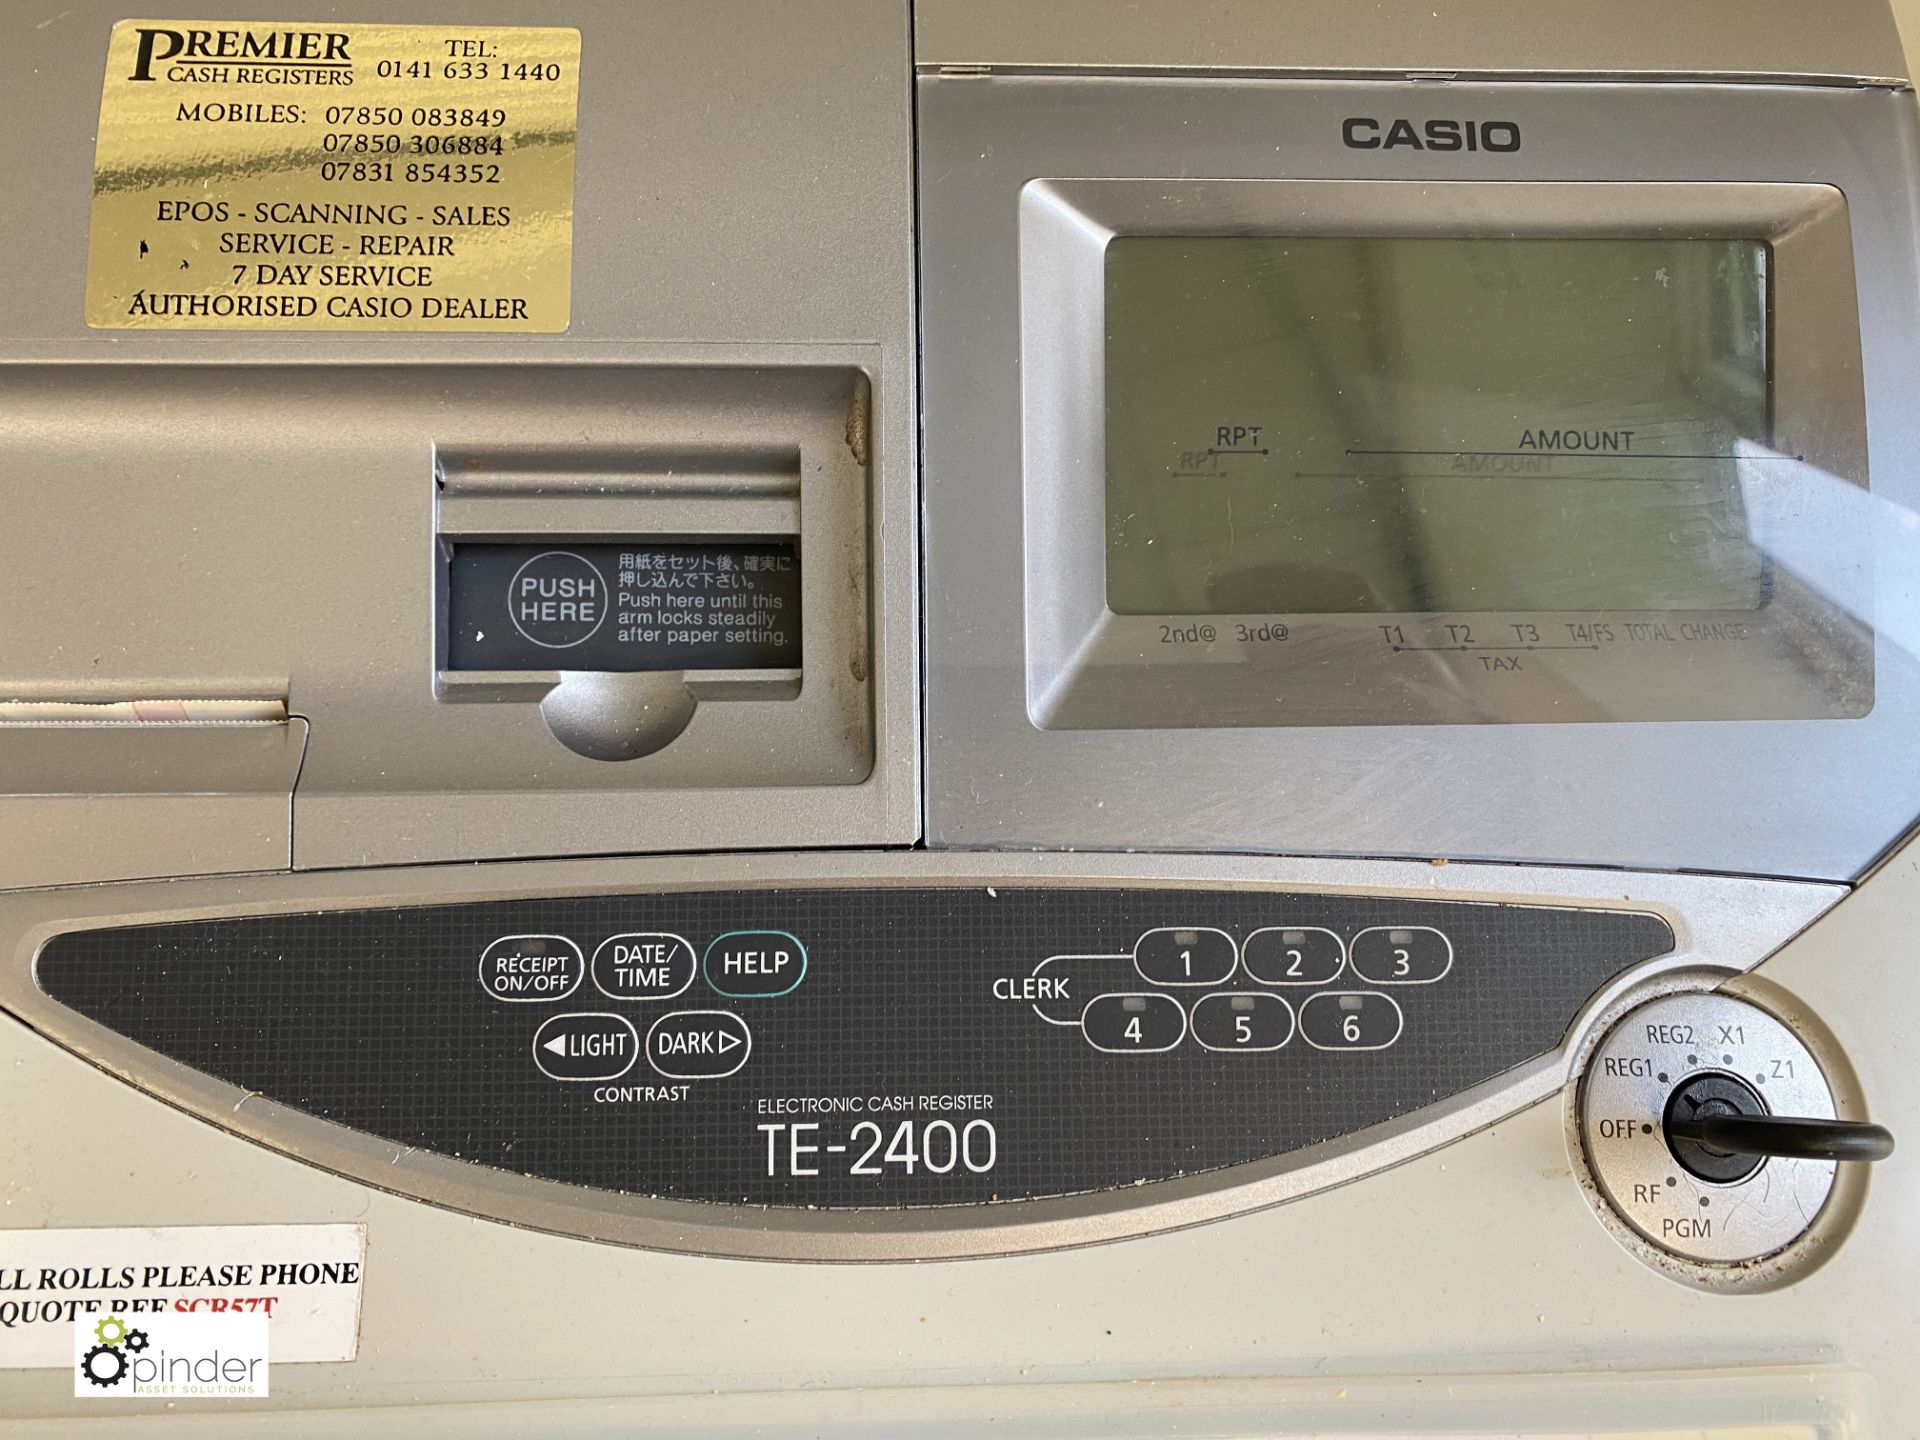 Casio TE-2400-1 Electronic Cash Register - Image 3 of 4